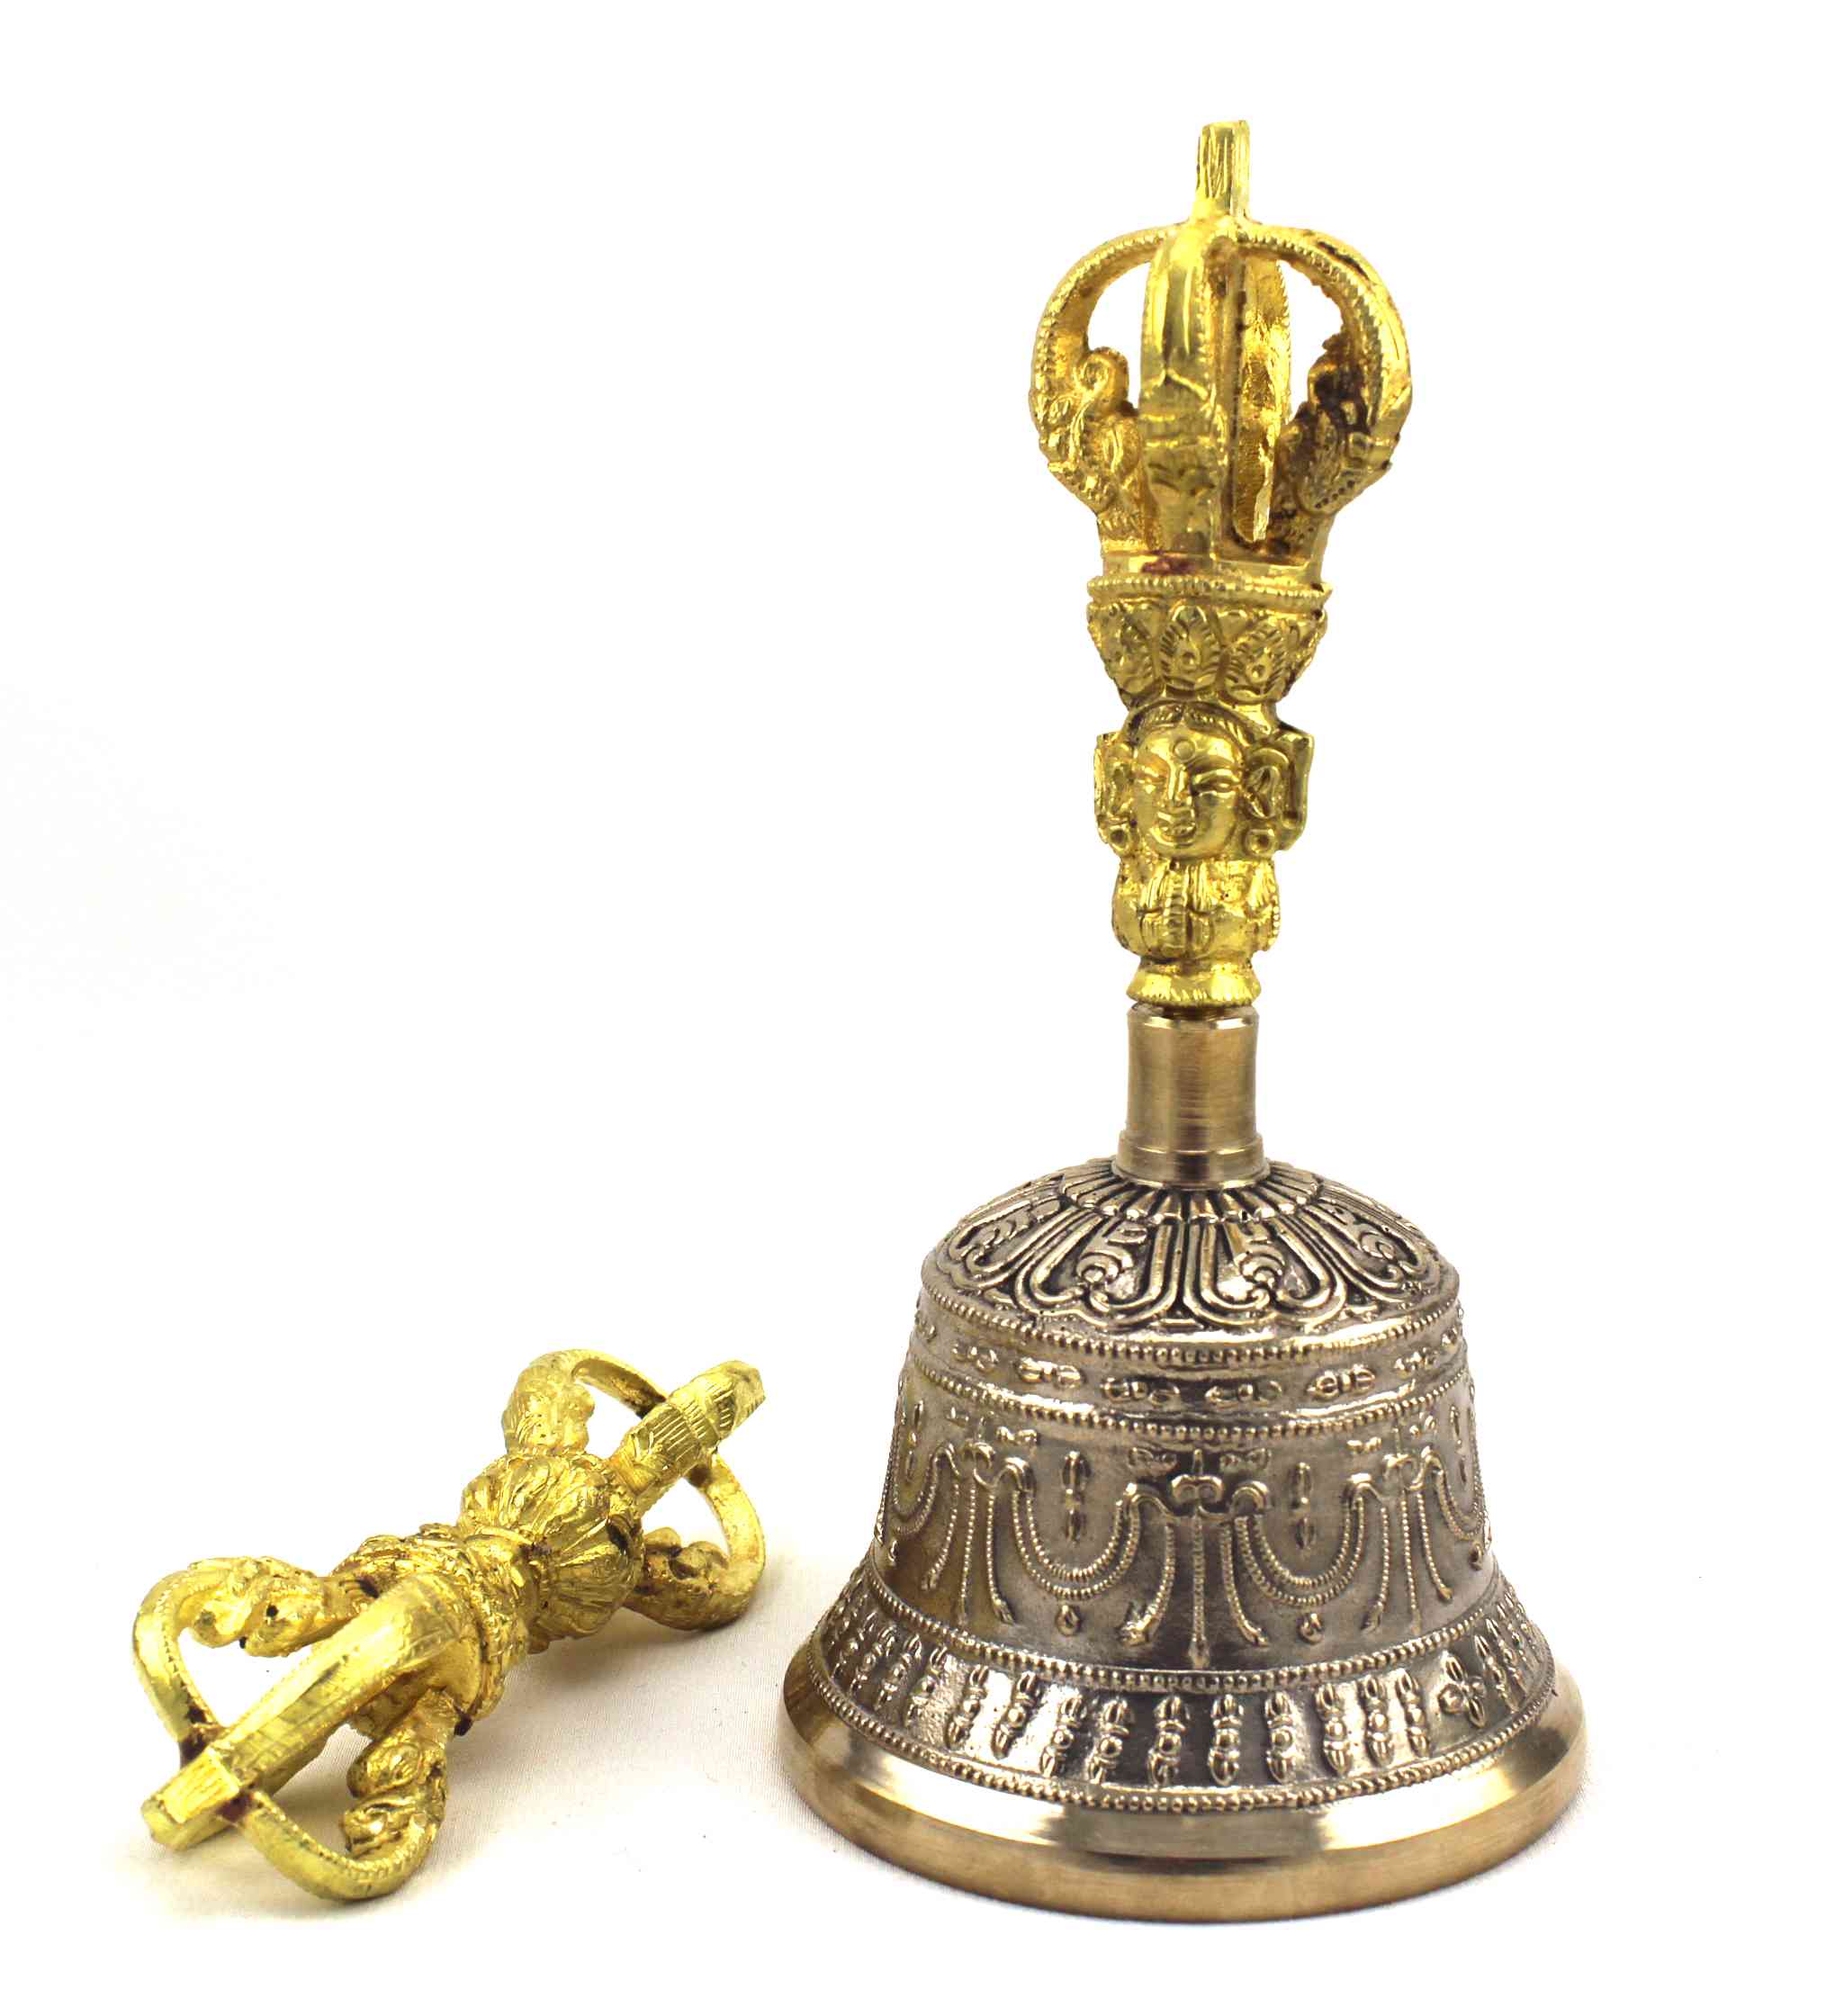 Tibetský zvonček Bodhisattva Premium malý 22-06